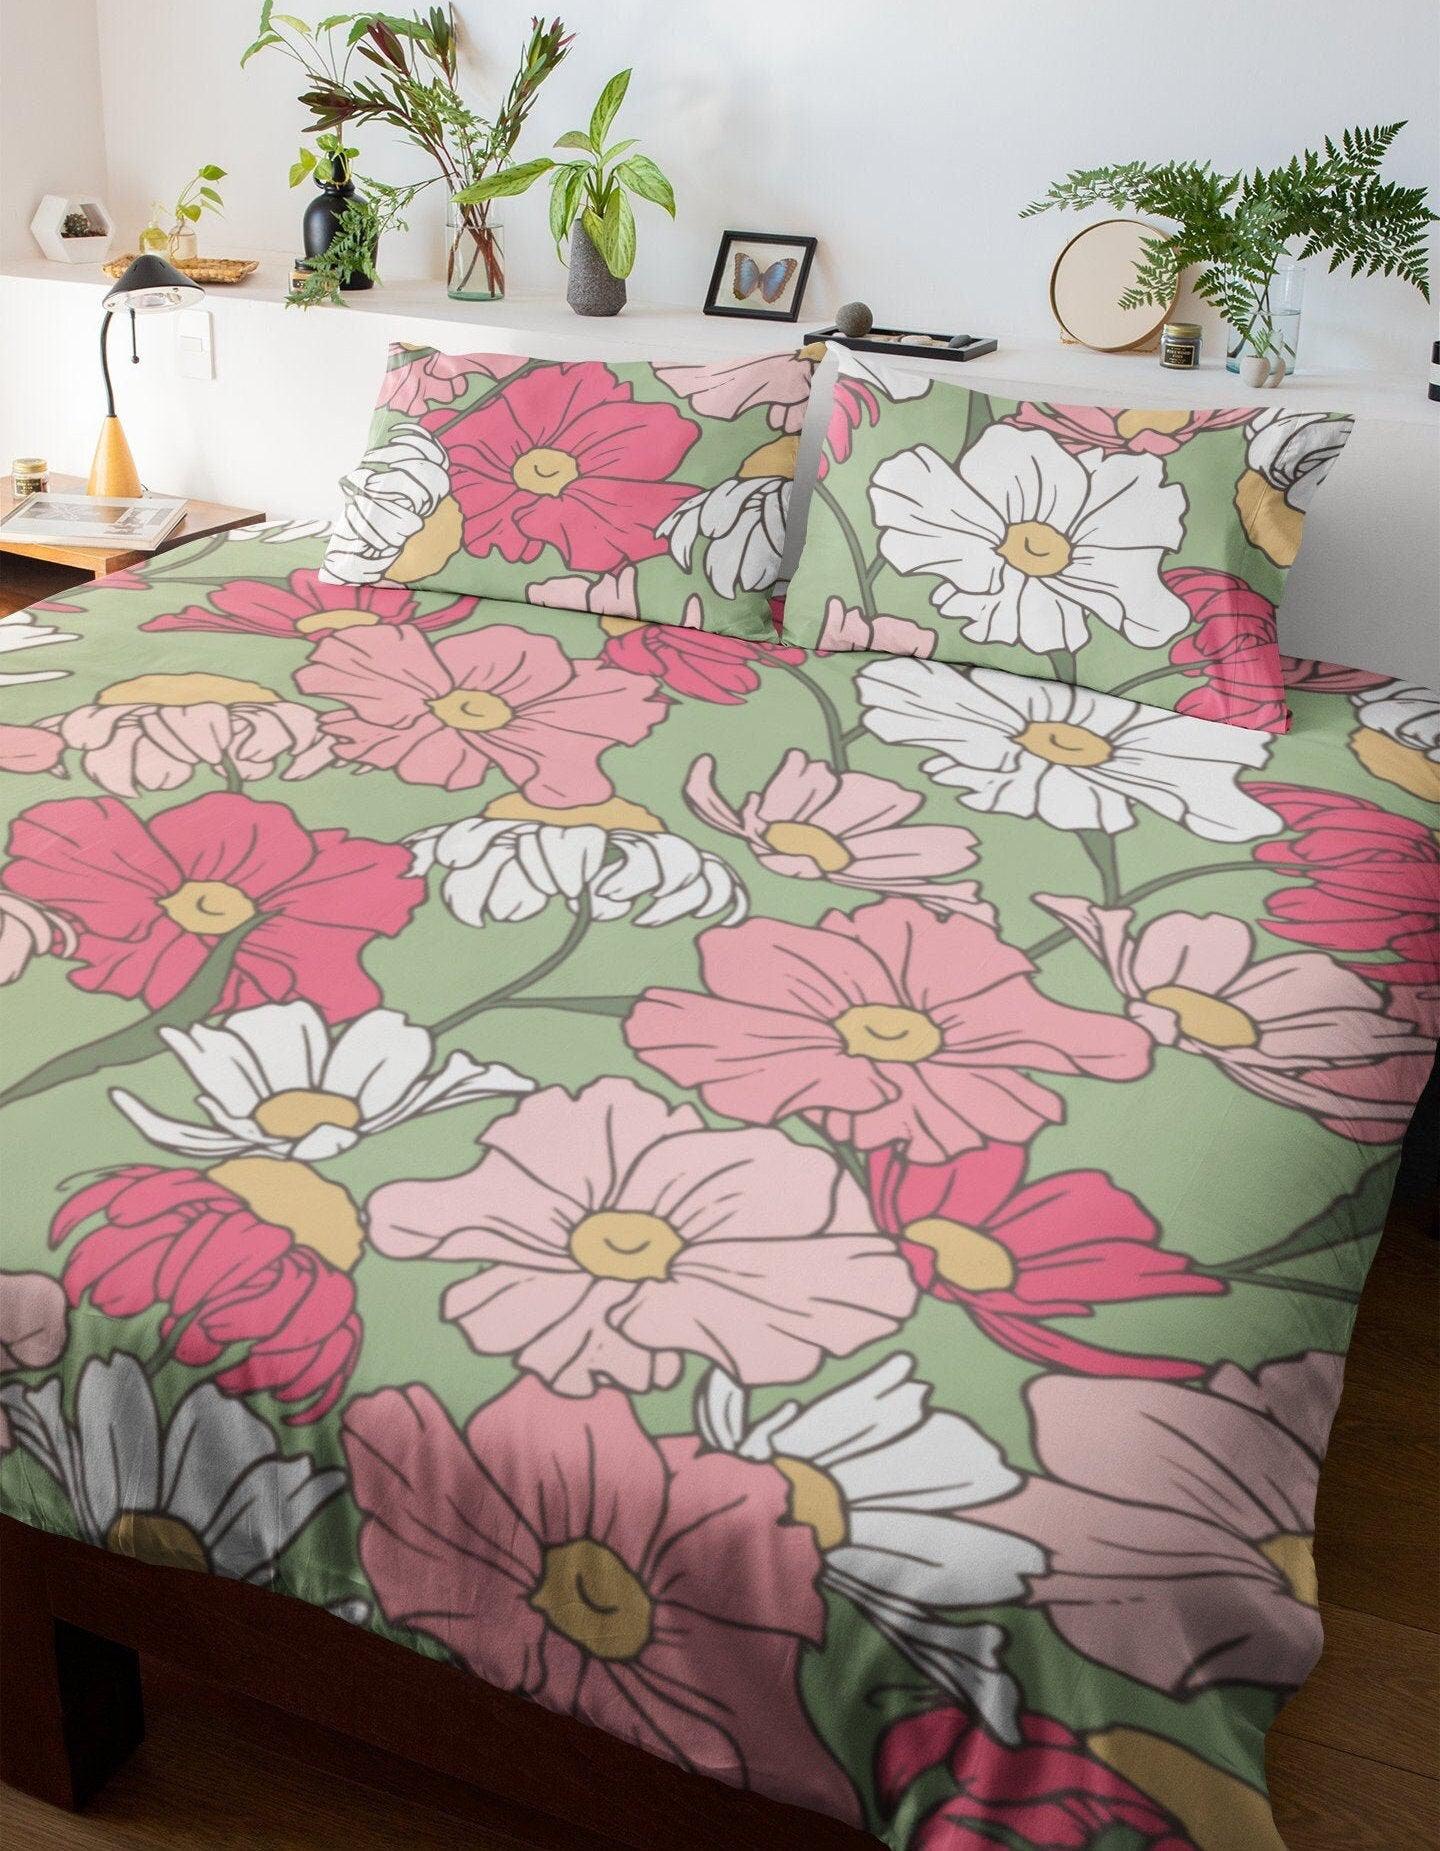 daintyduvet Green Duvet Cover Set Pink Floral Design | Dorm Bedding Set with Pillow Cover Case